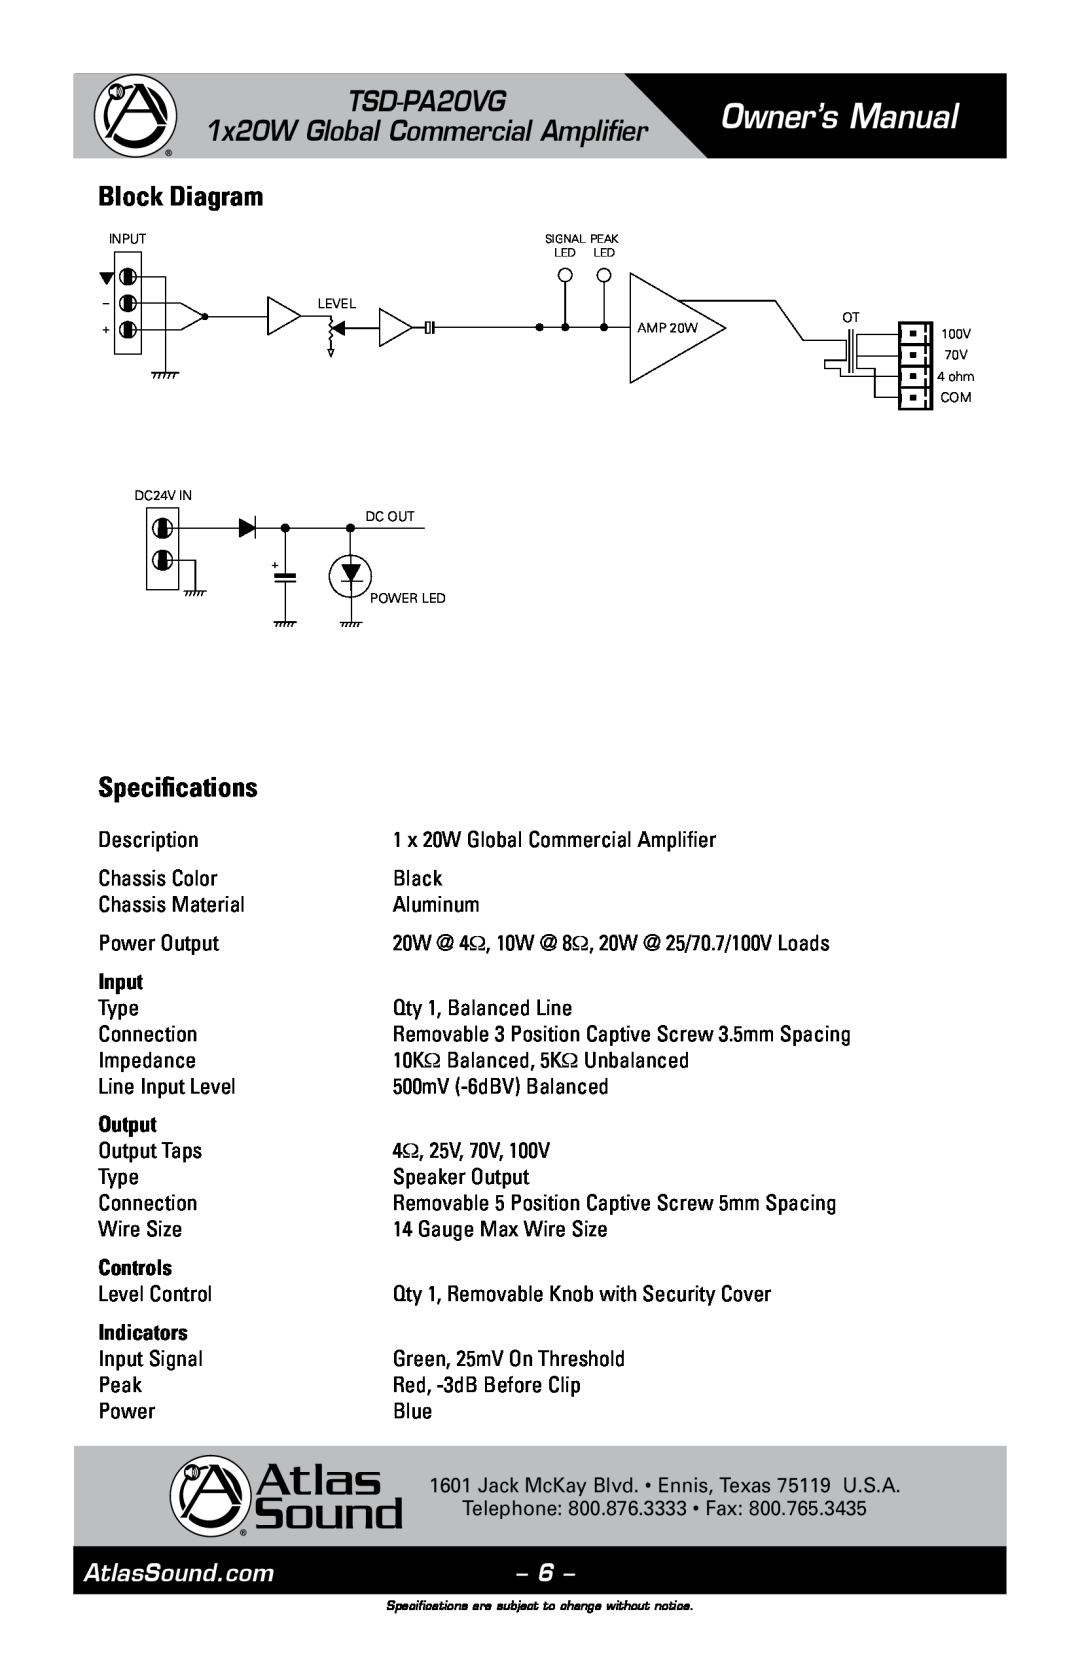 Atlas Sound TSD-PA20VG Block Diagram, Specifications, Input, Output, Controls, Indicators, Owner’s Manual, AtlasSound.com 